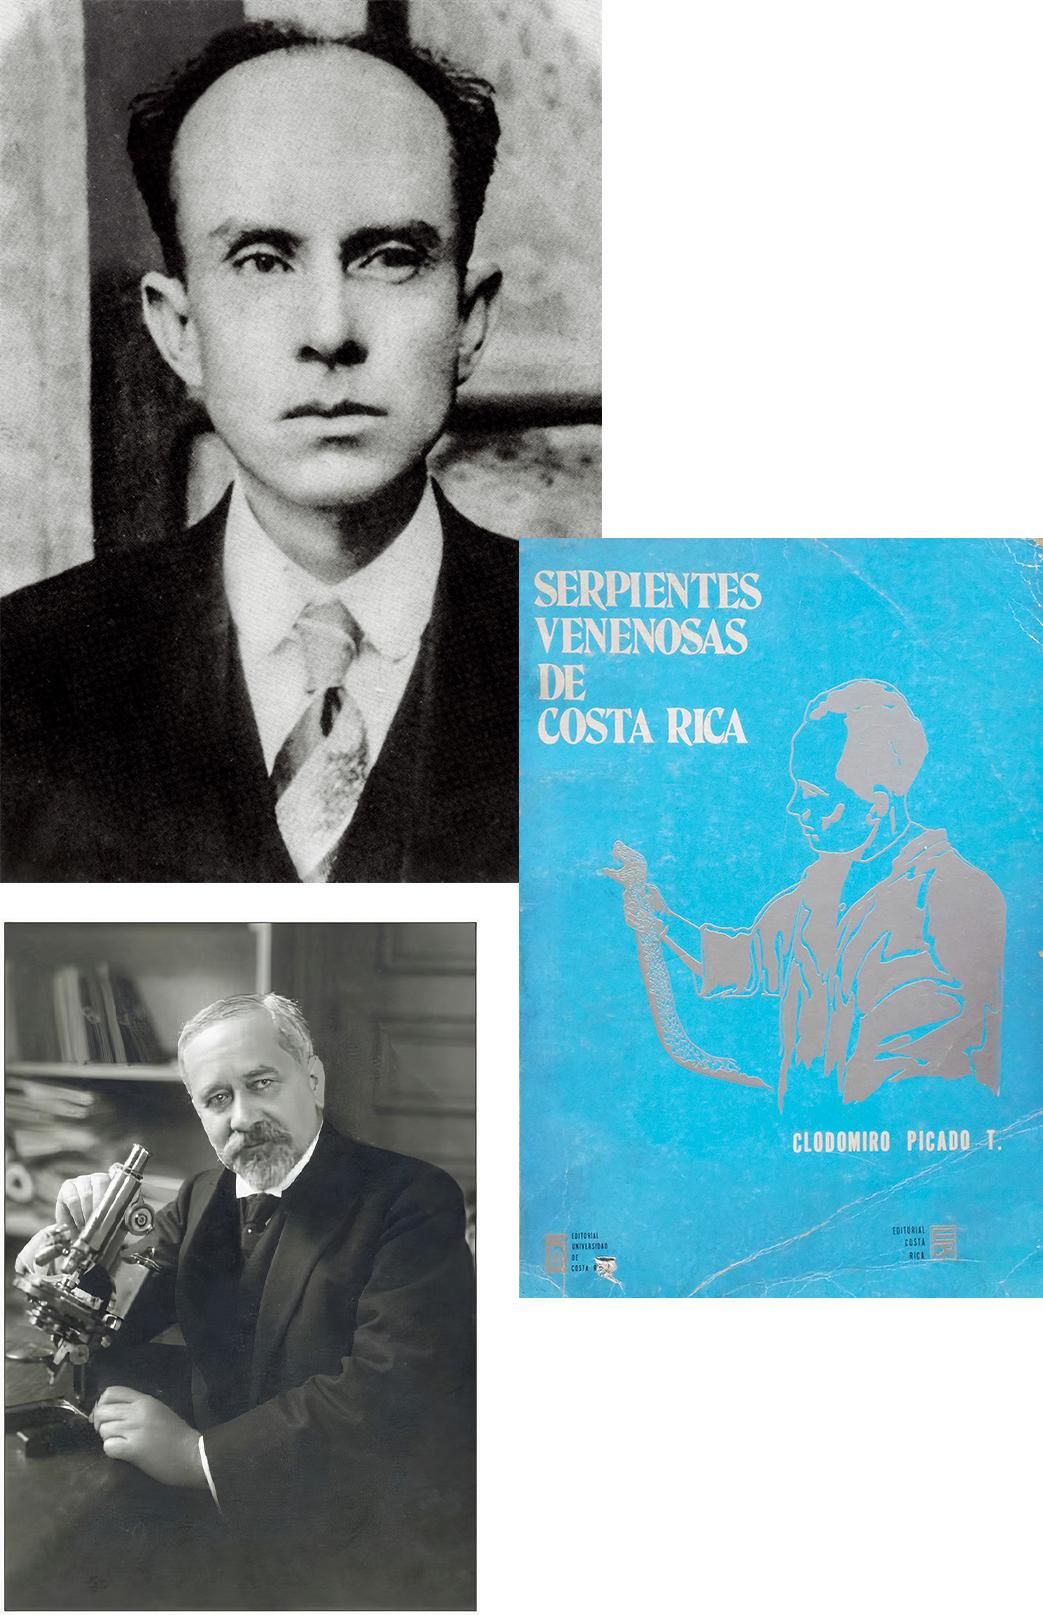 Clodomiro Picado, his book and Albert Calmette